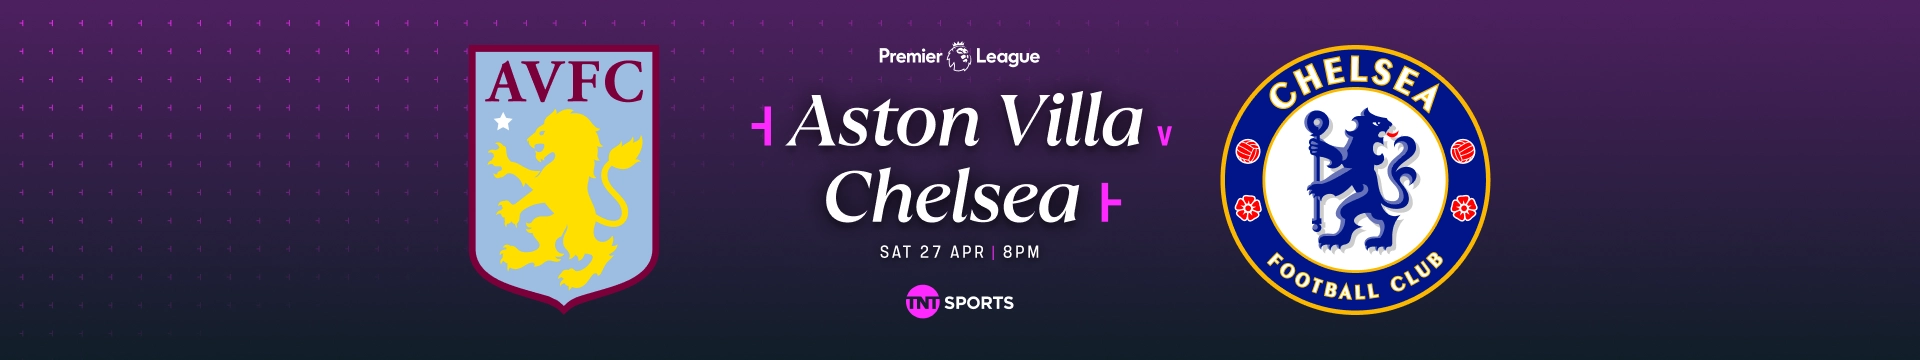 Aston Villa v Chelsea Saturday 27 April at 8pm